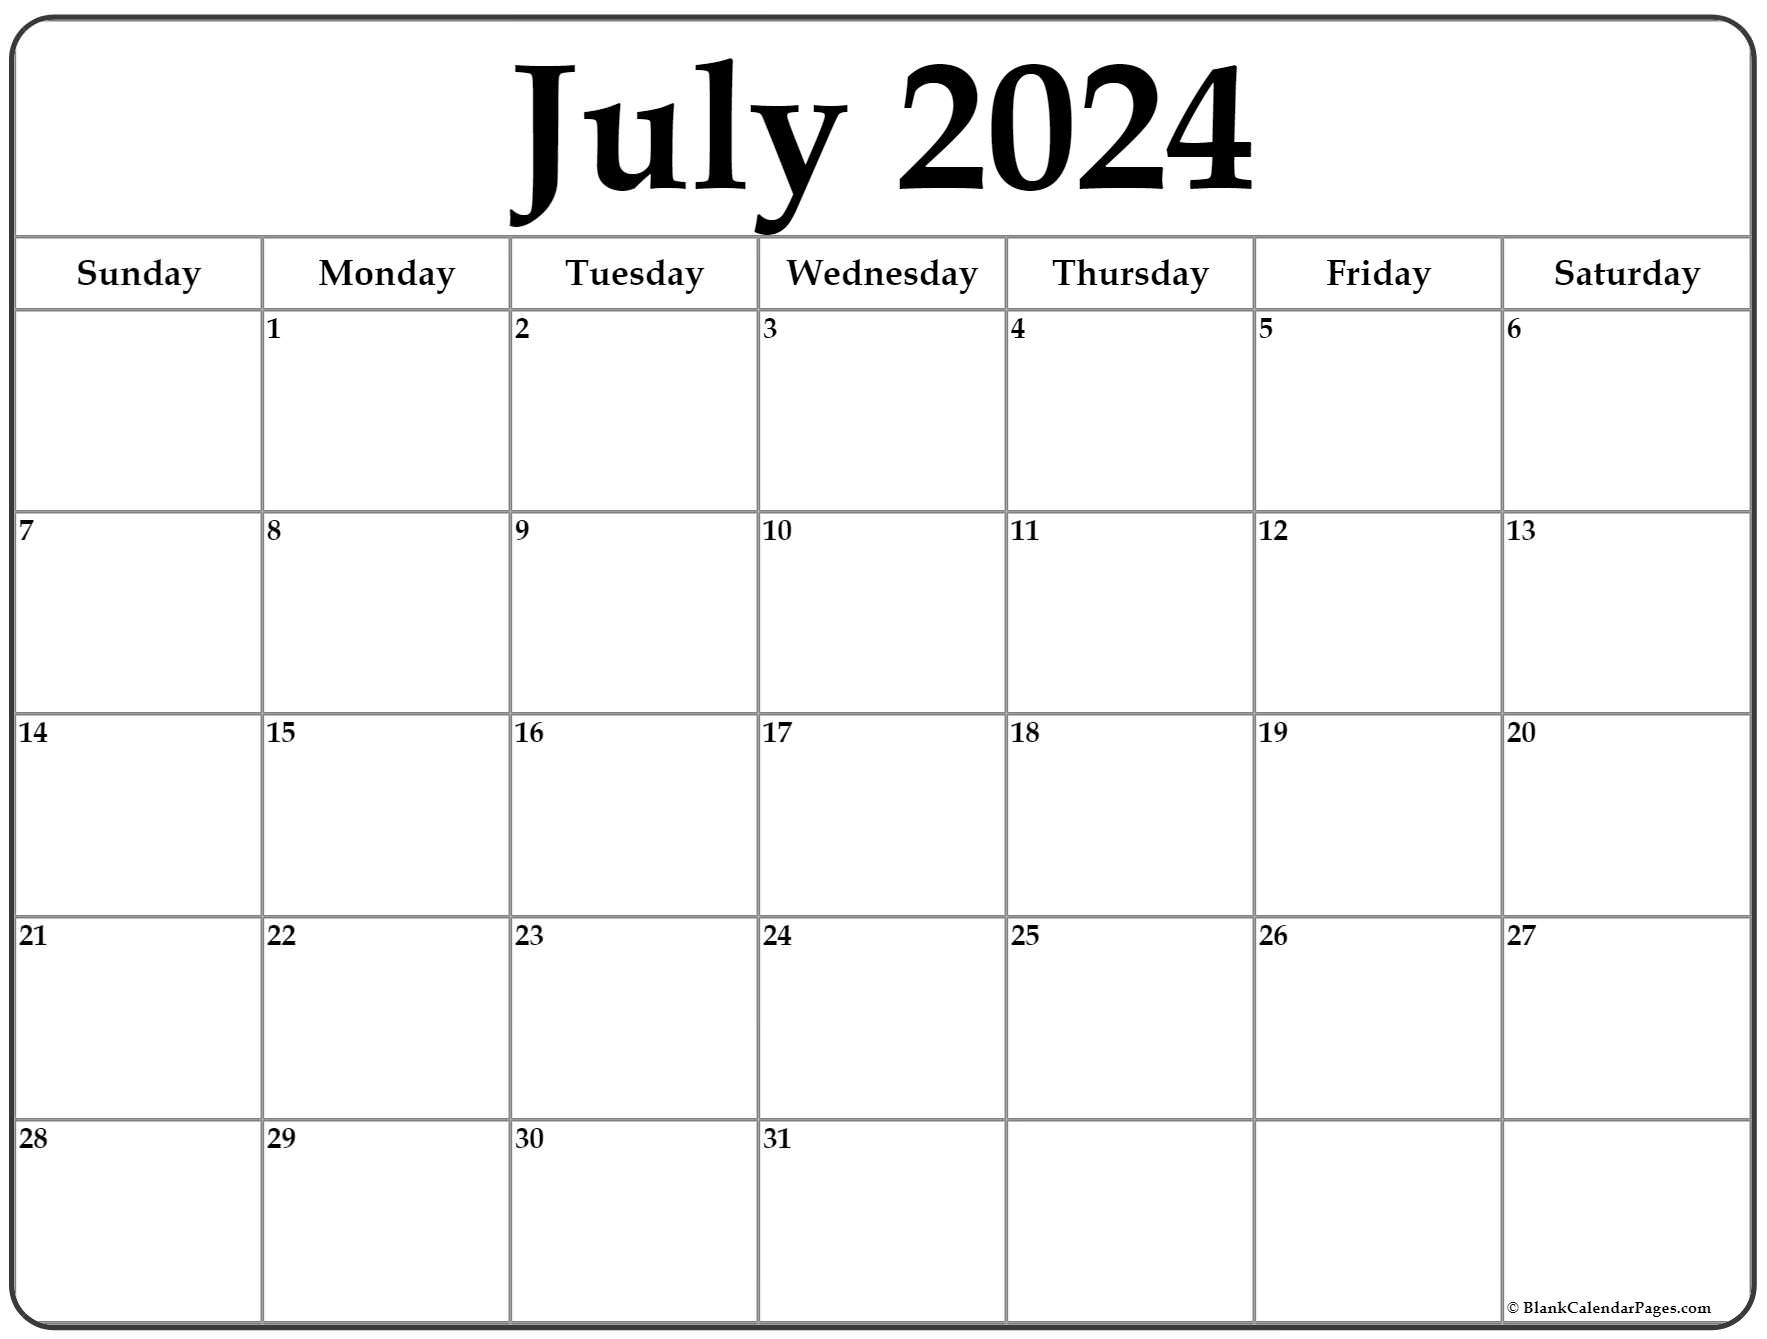 July 2024 Calendar | Free Printable Calendar intended for Calendar Page July 2024